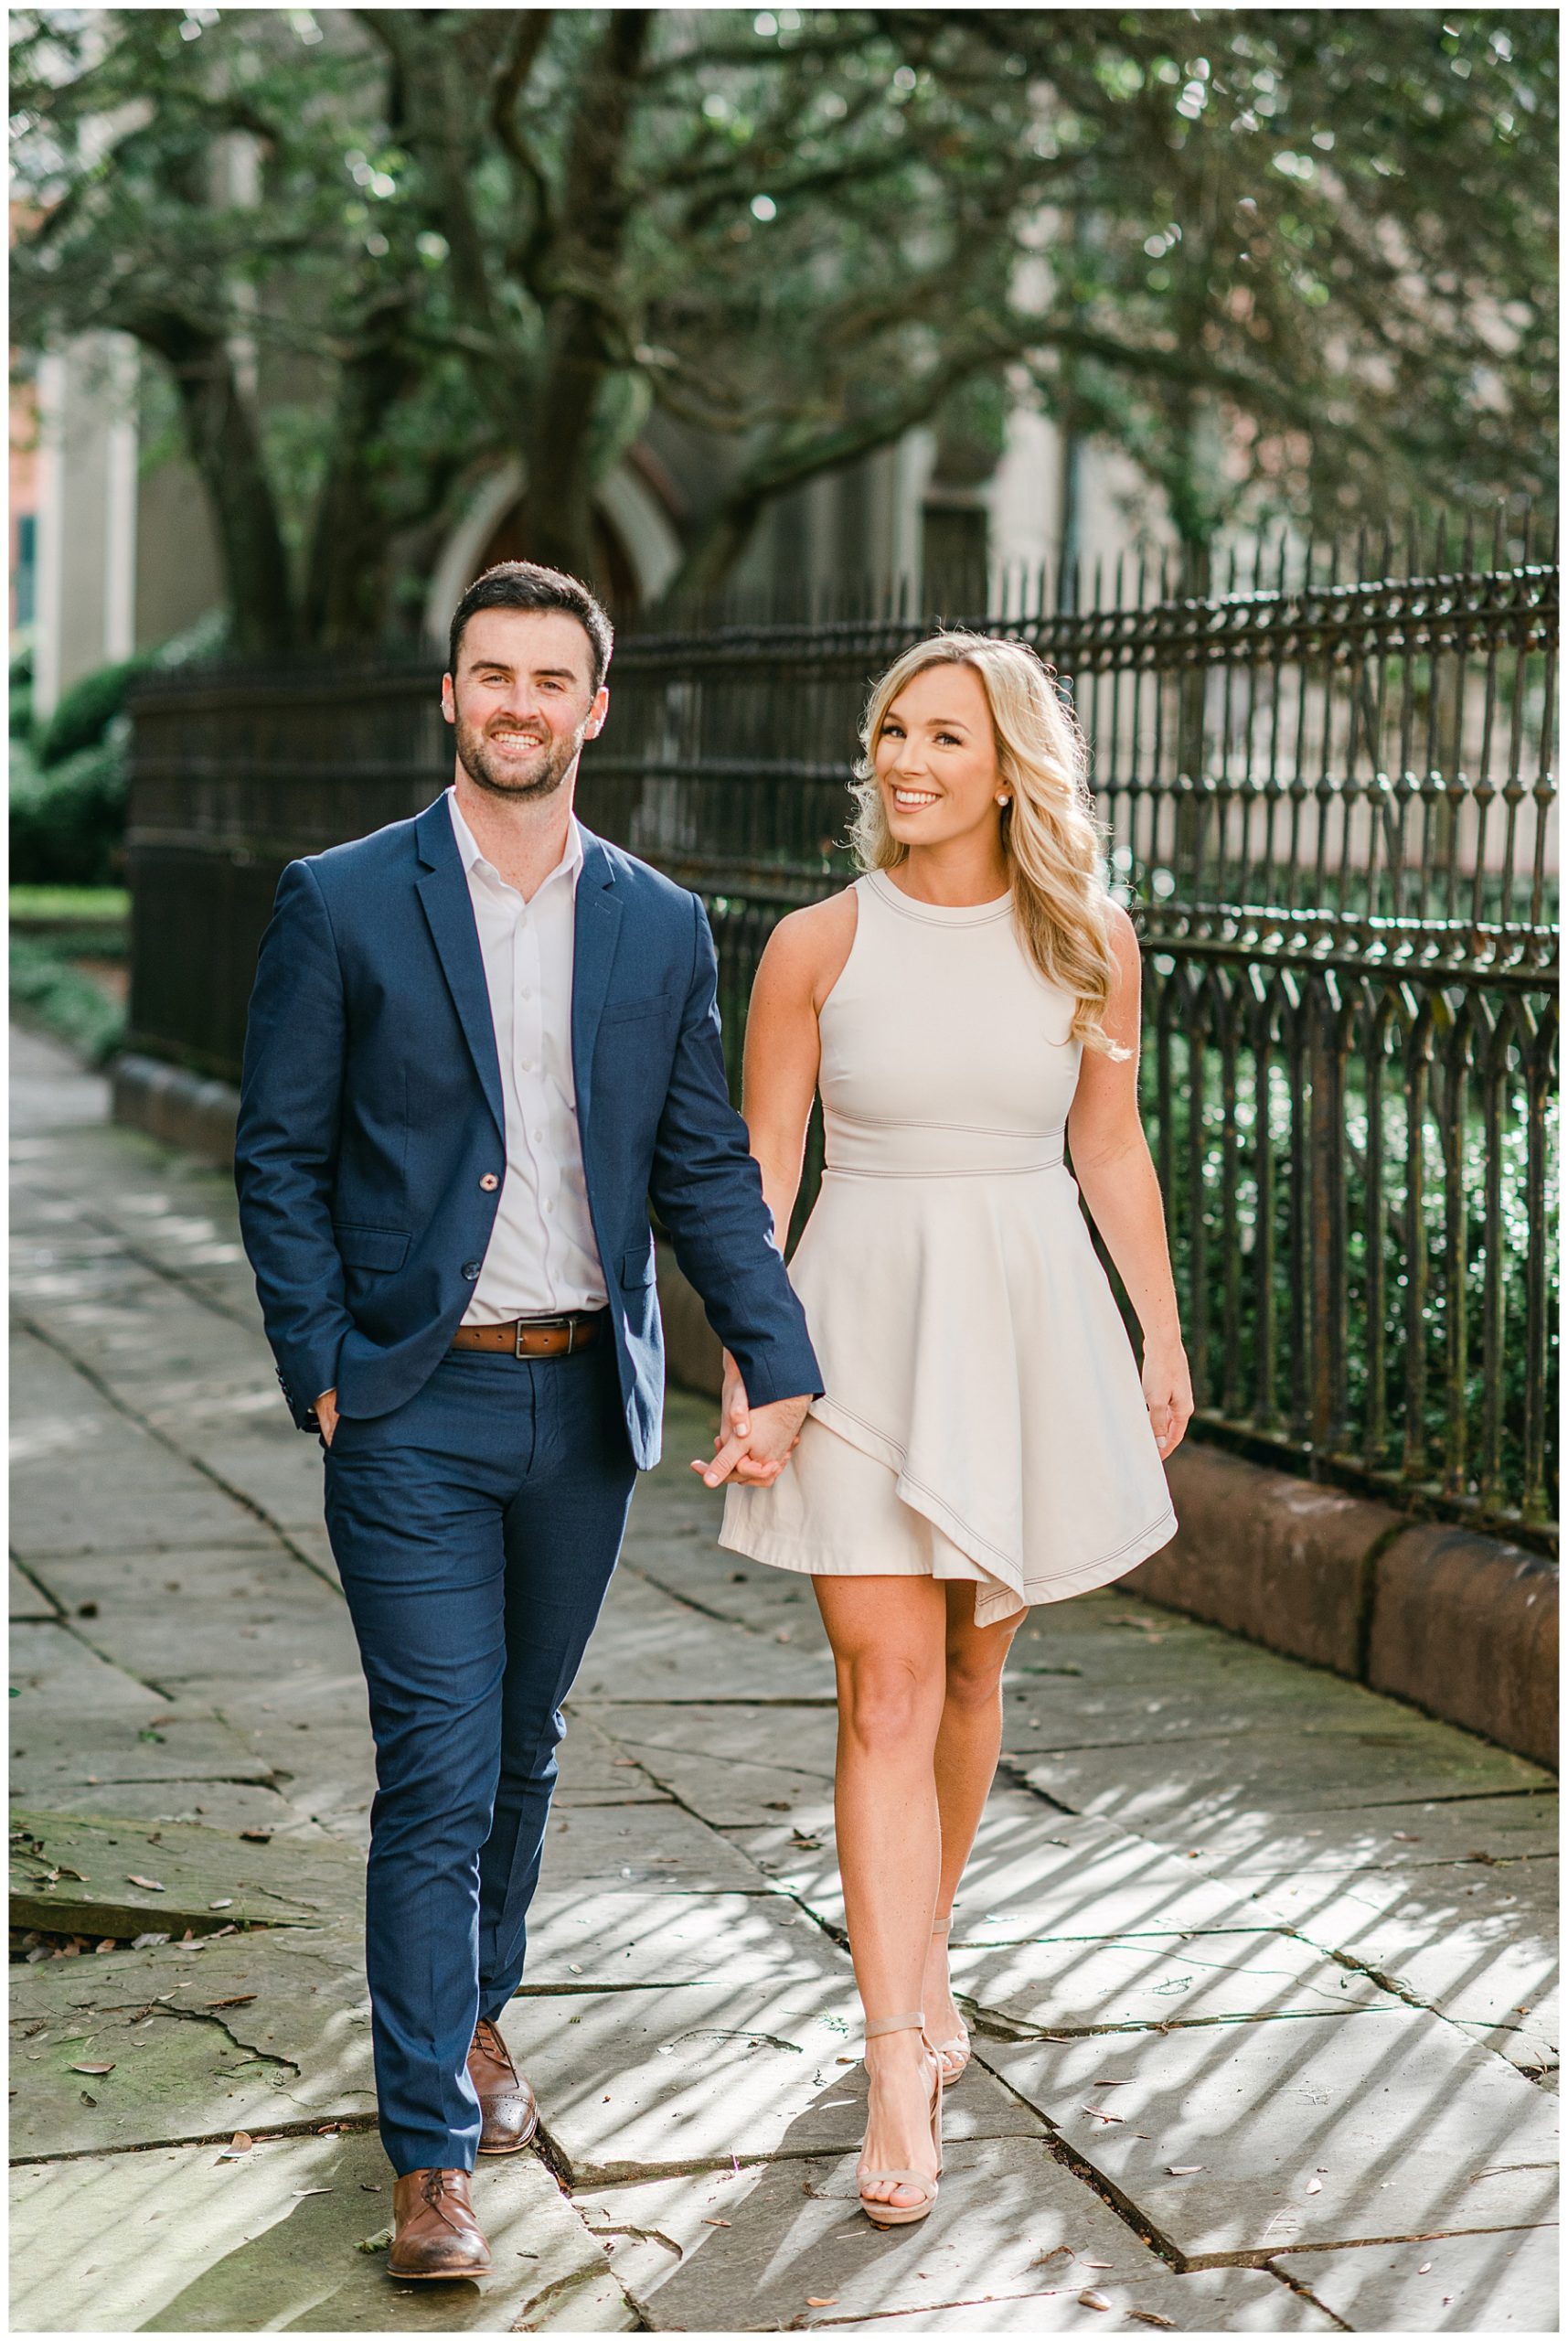 Engagement Photo Location in Savannah